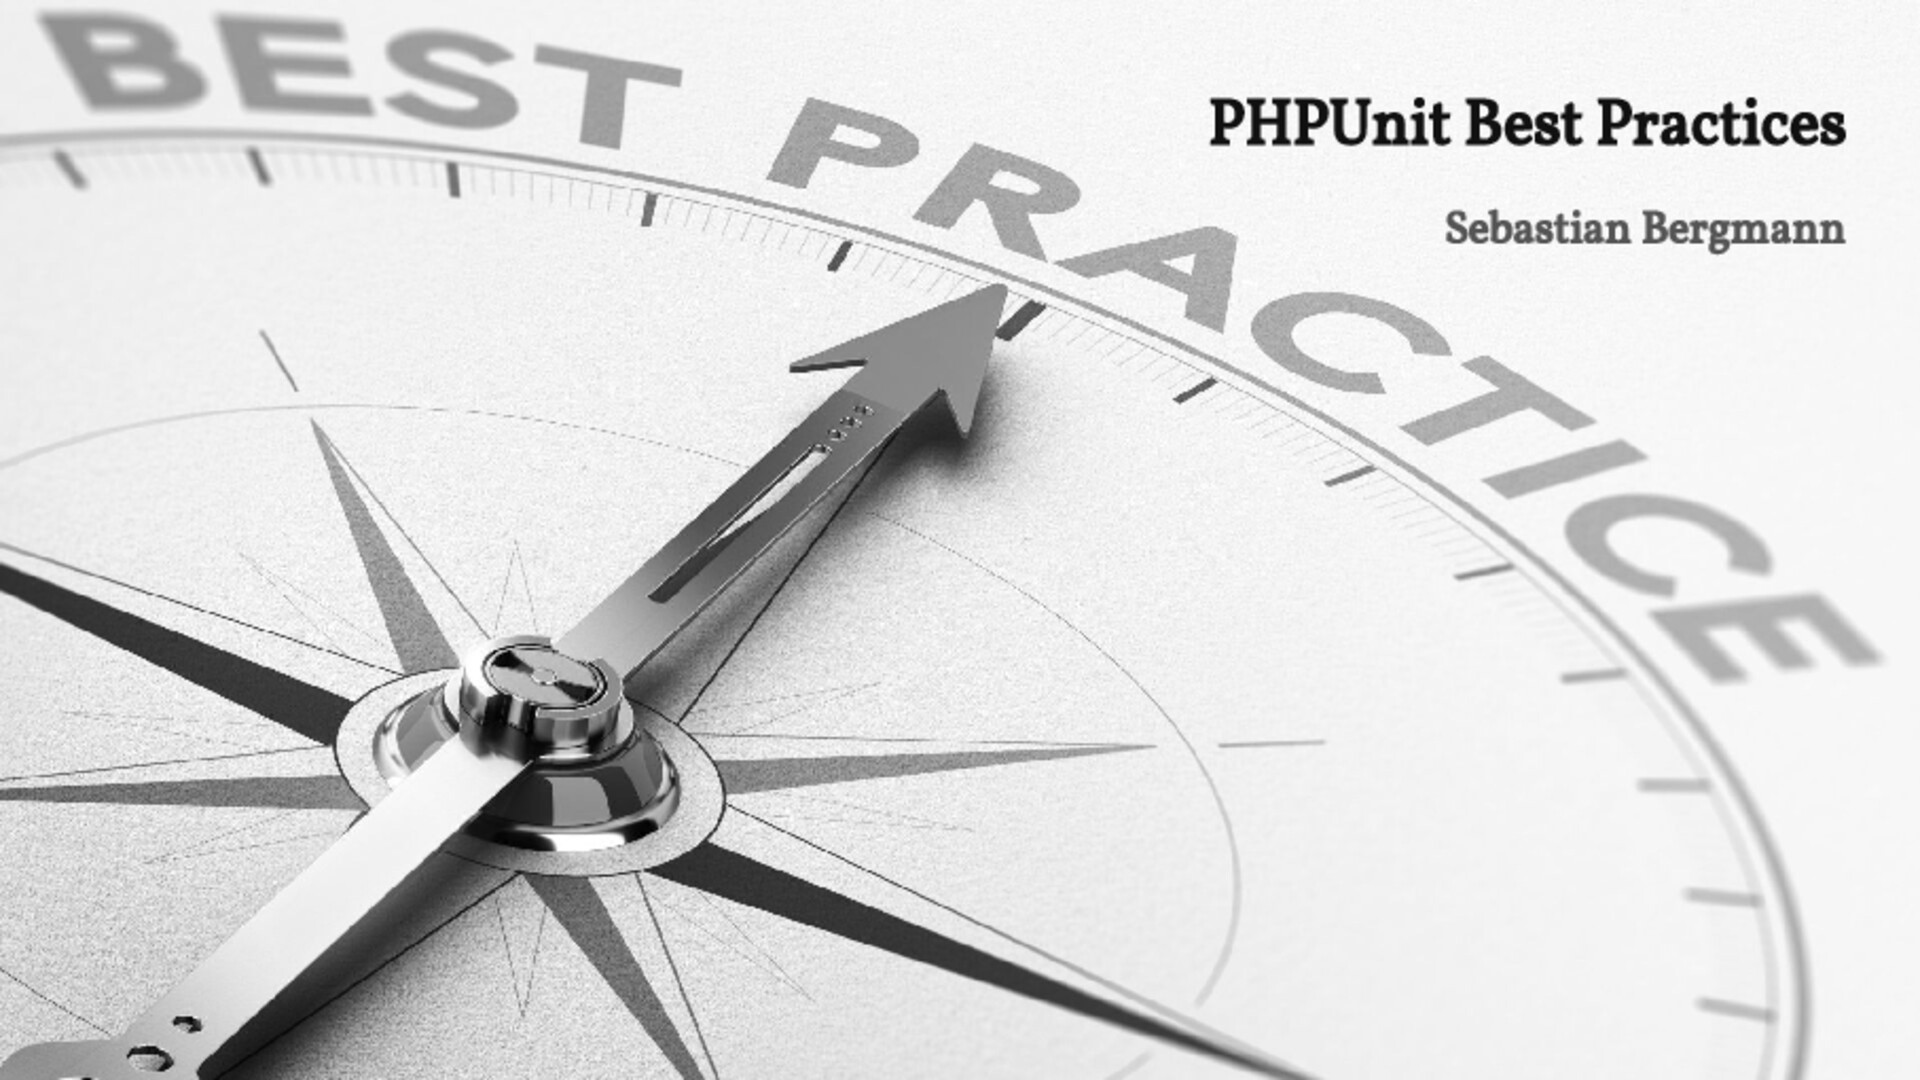 PHPUnit Best Practices